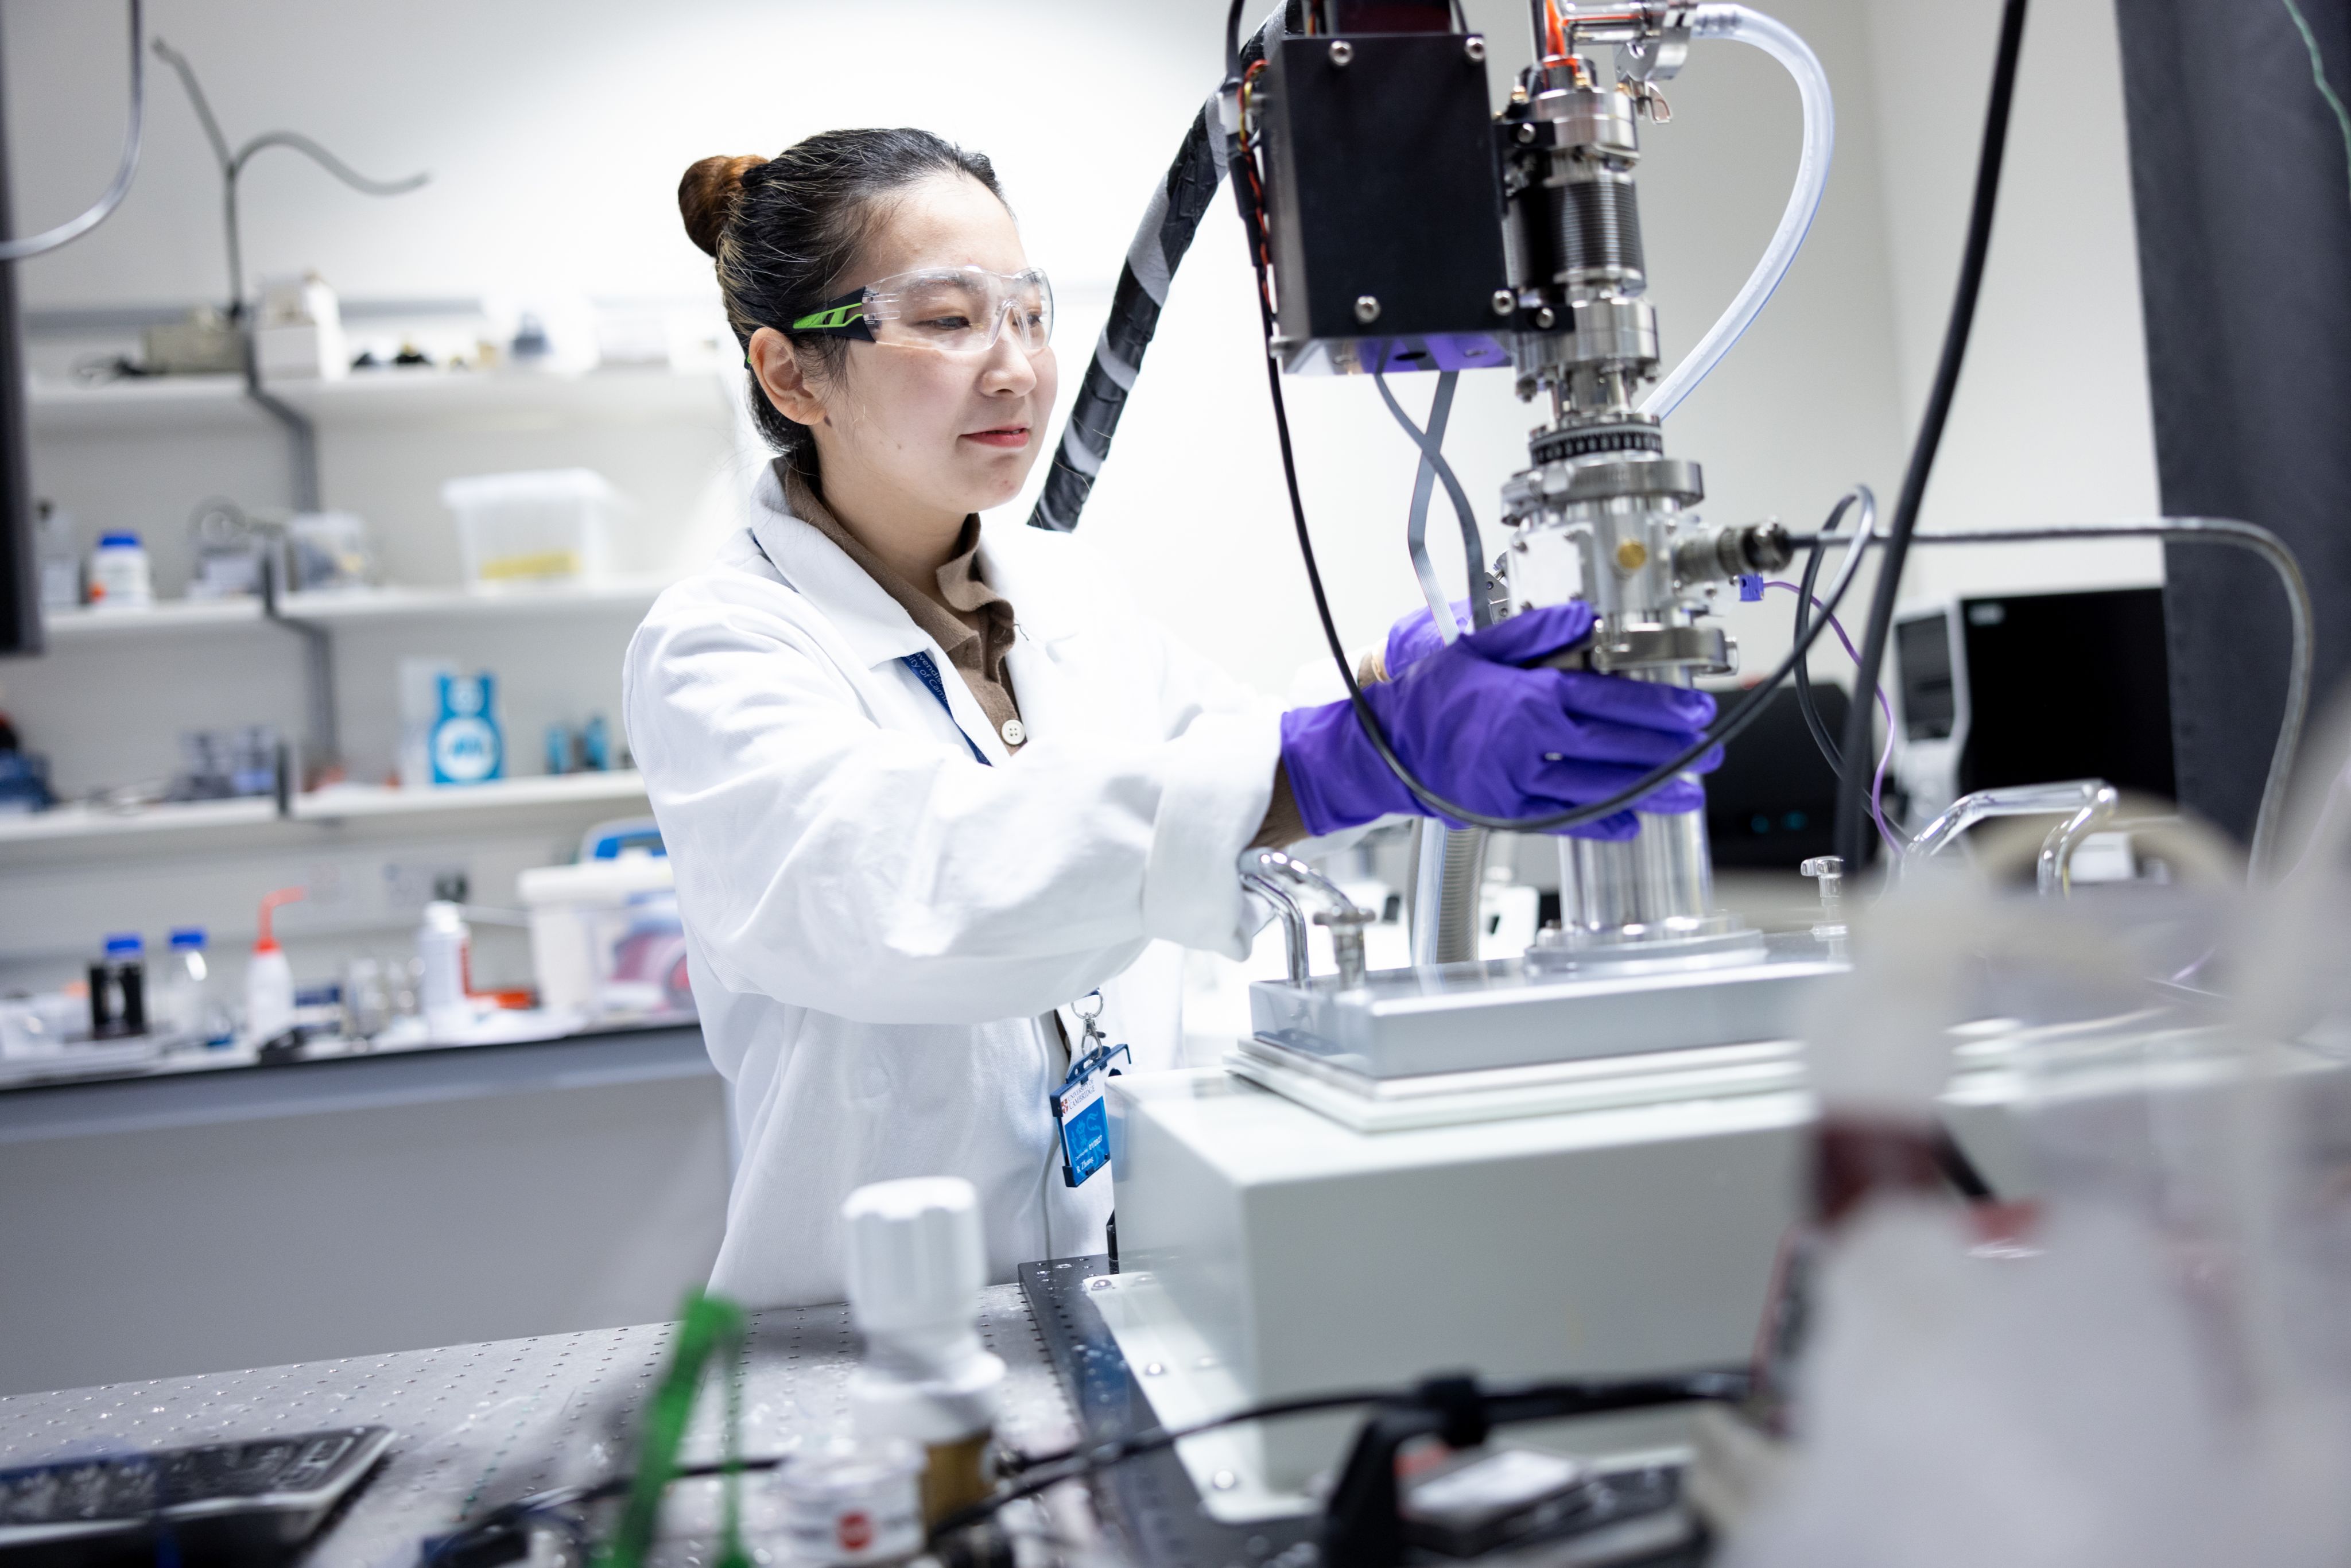 CEB researcher operates equipment in the laboratory